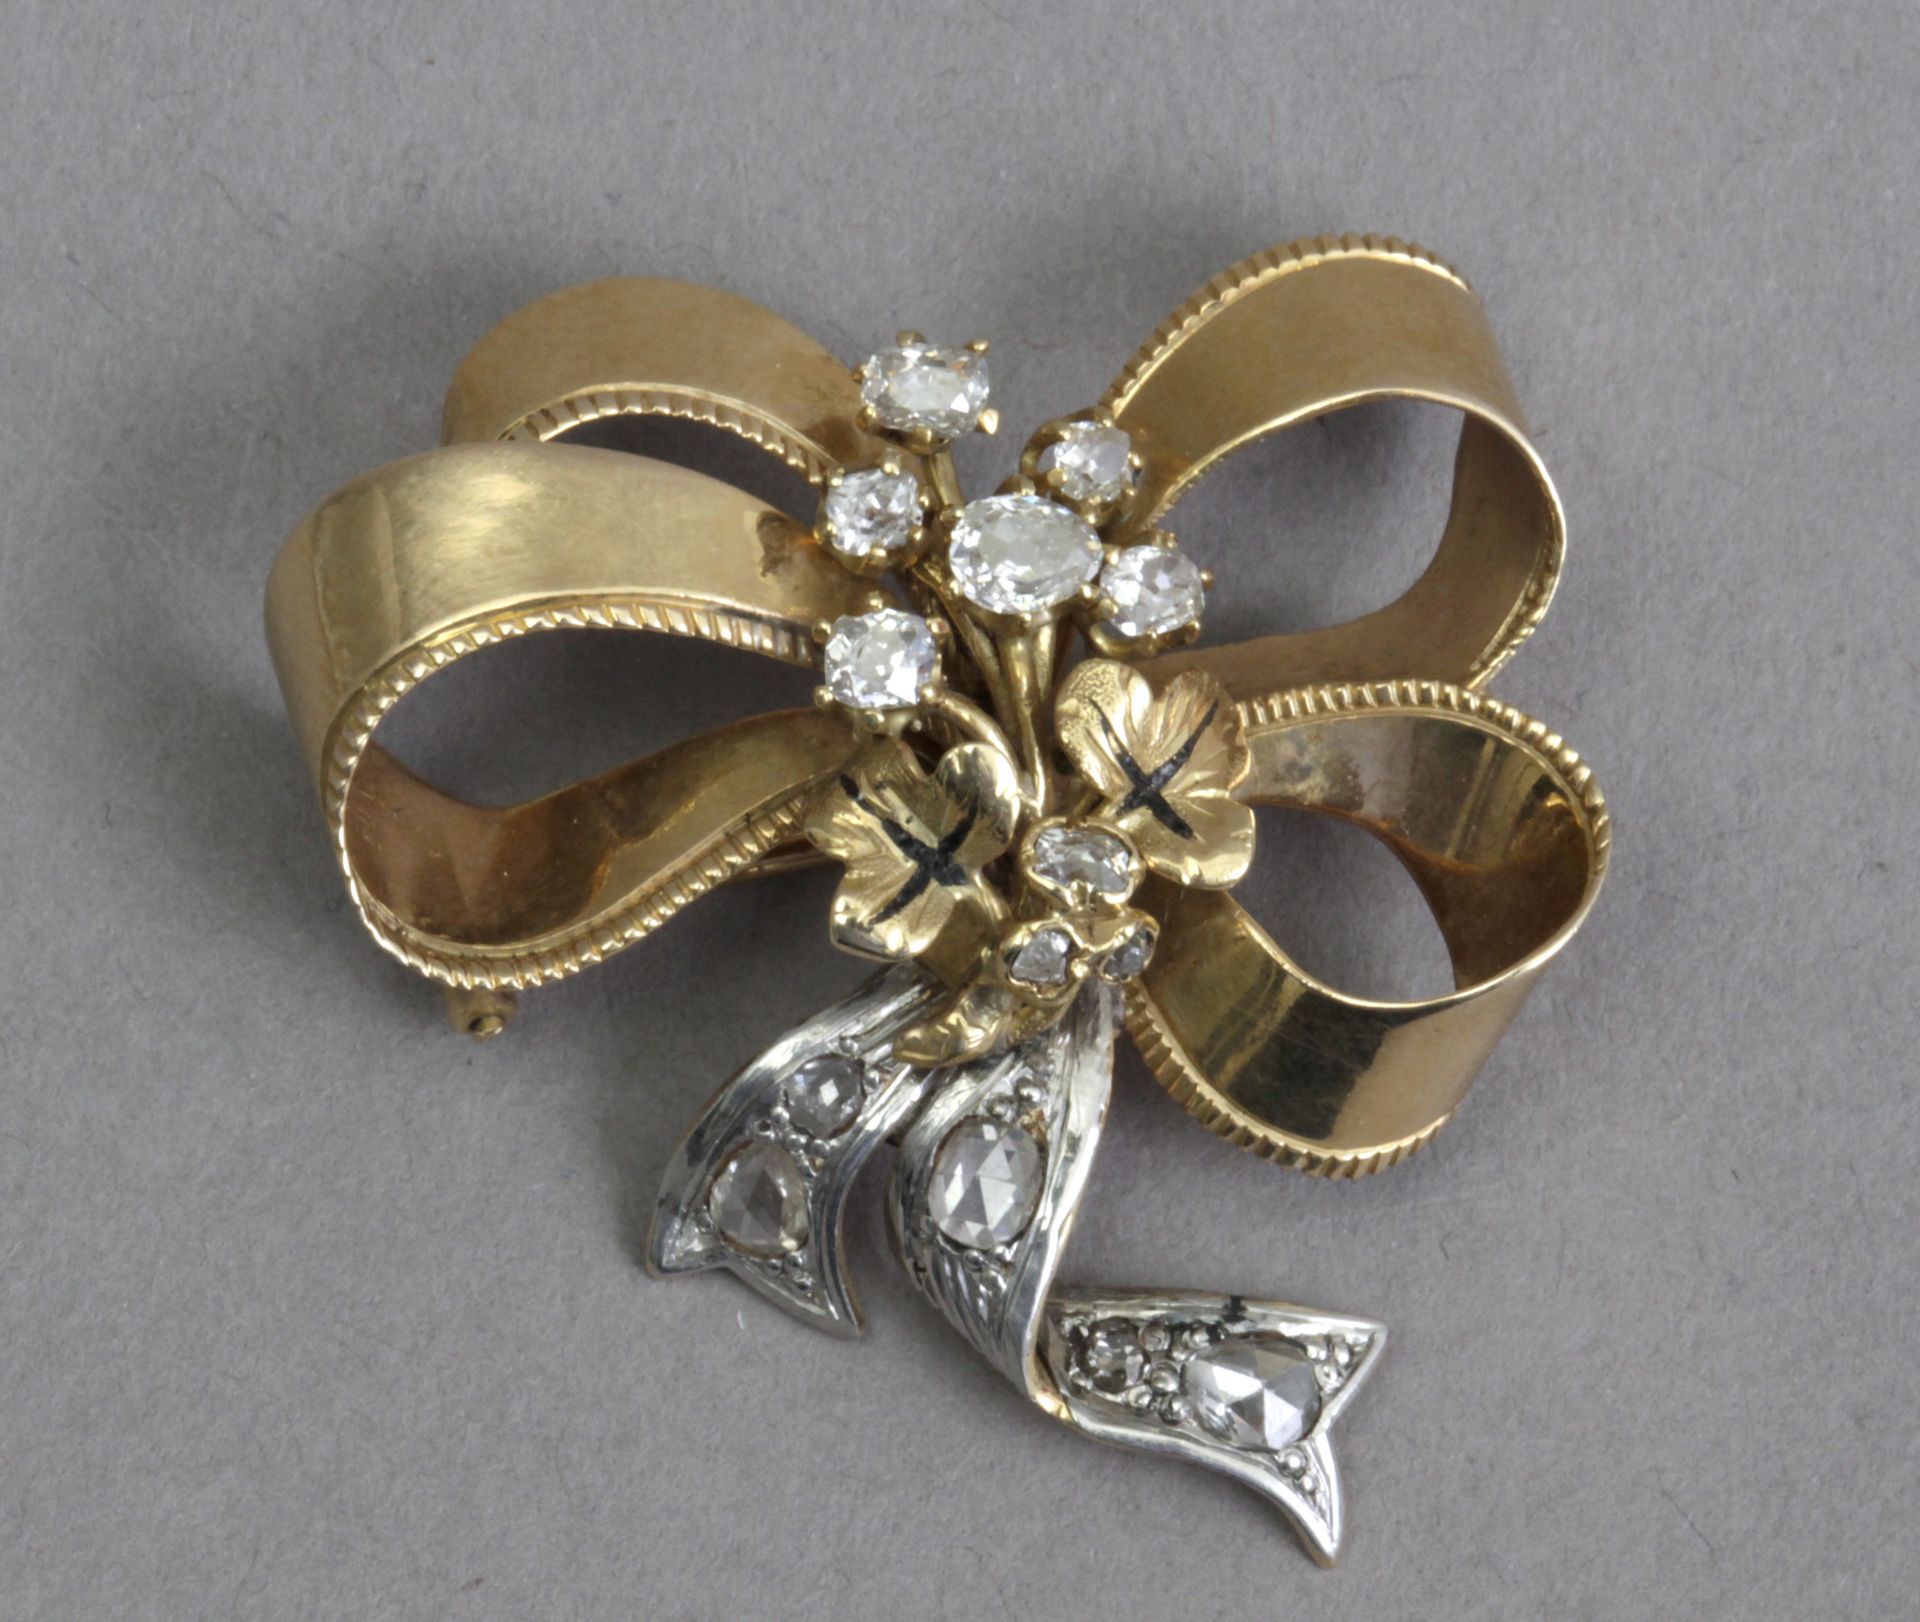 A 19th century diamond brooch